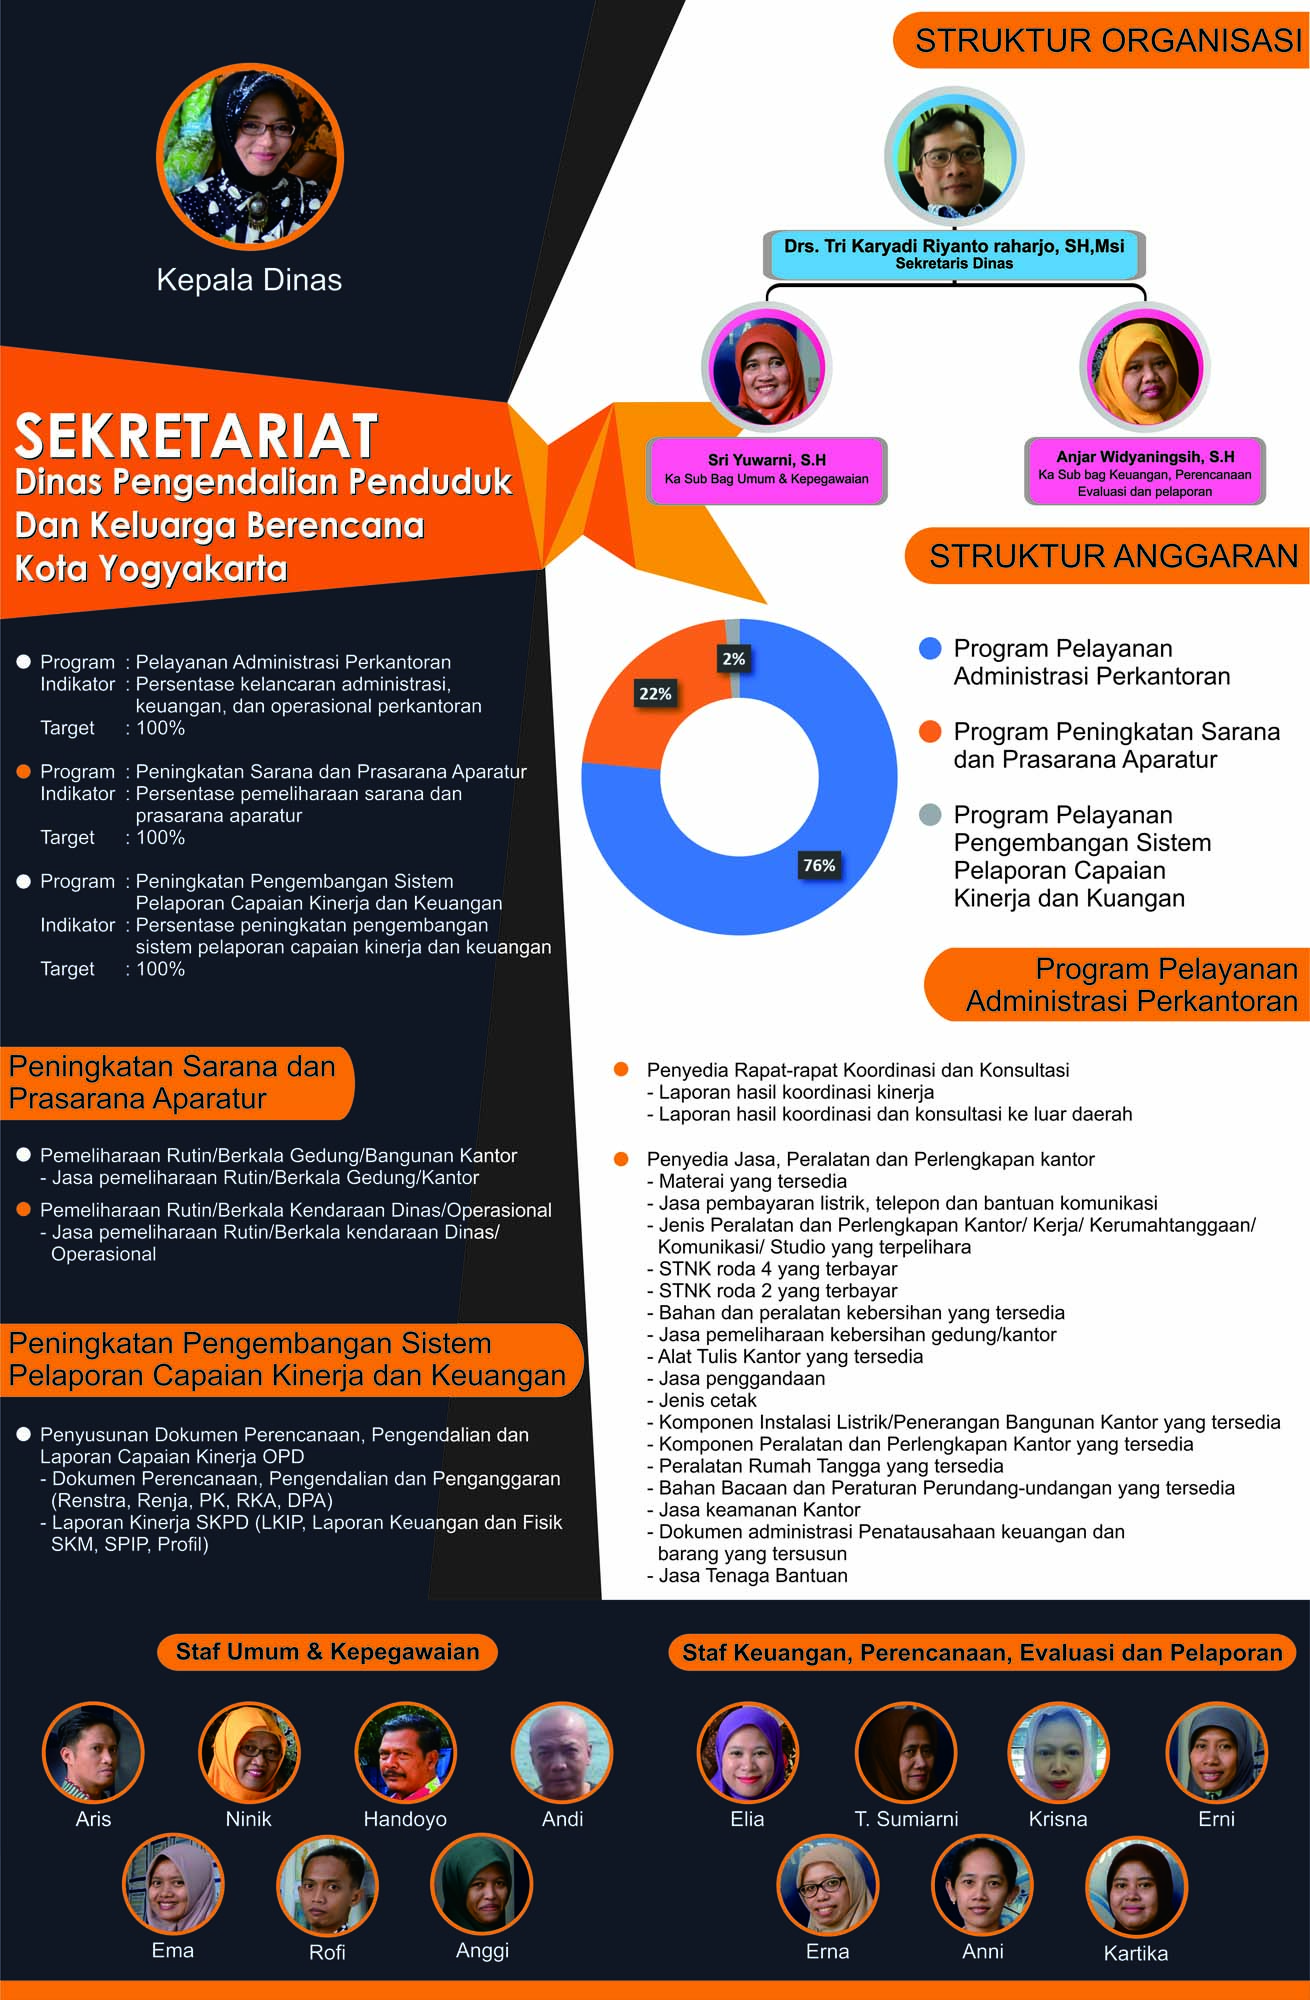 Koran Anggaran DPPKB Kota Yogyakarta - Sekretariat